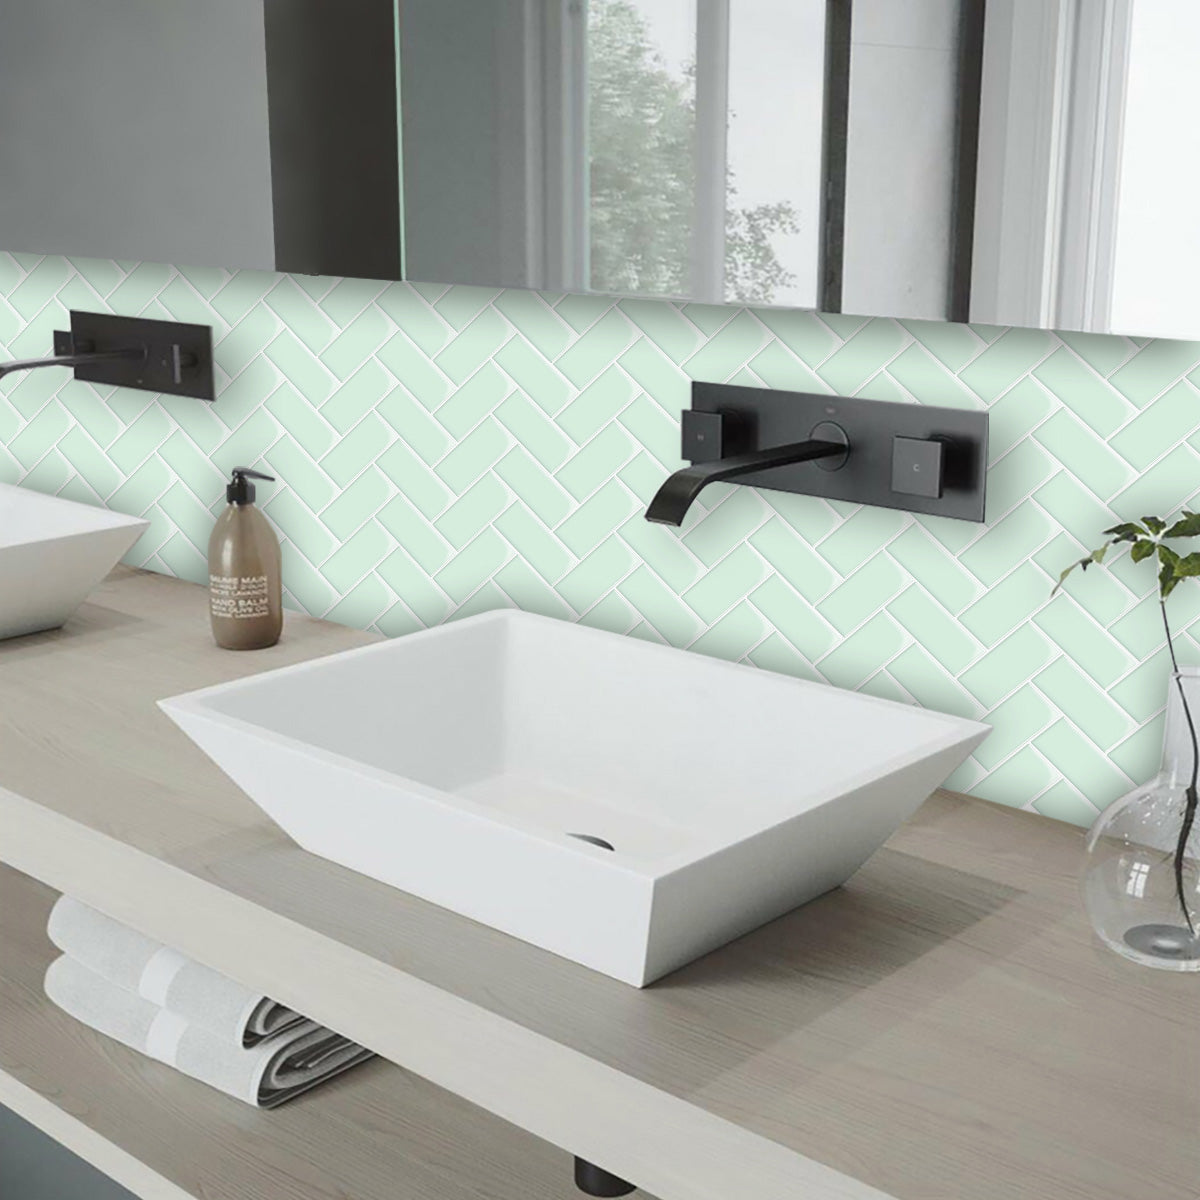 Mint green herringbone tiles over bathroom vanity